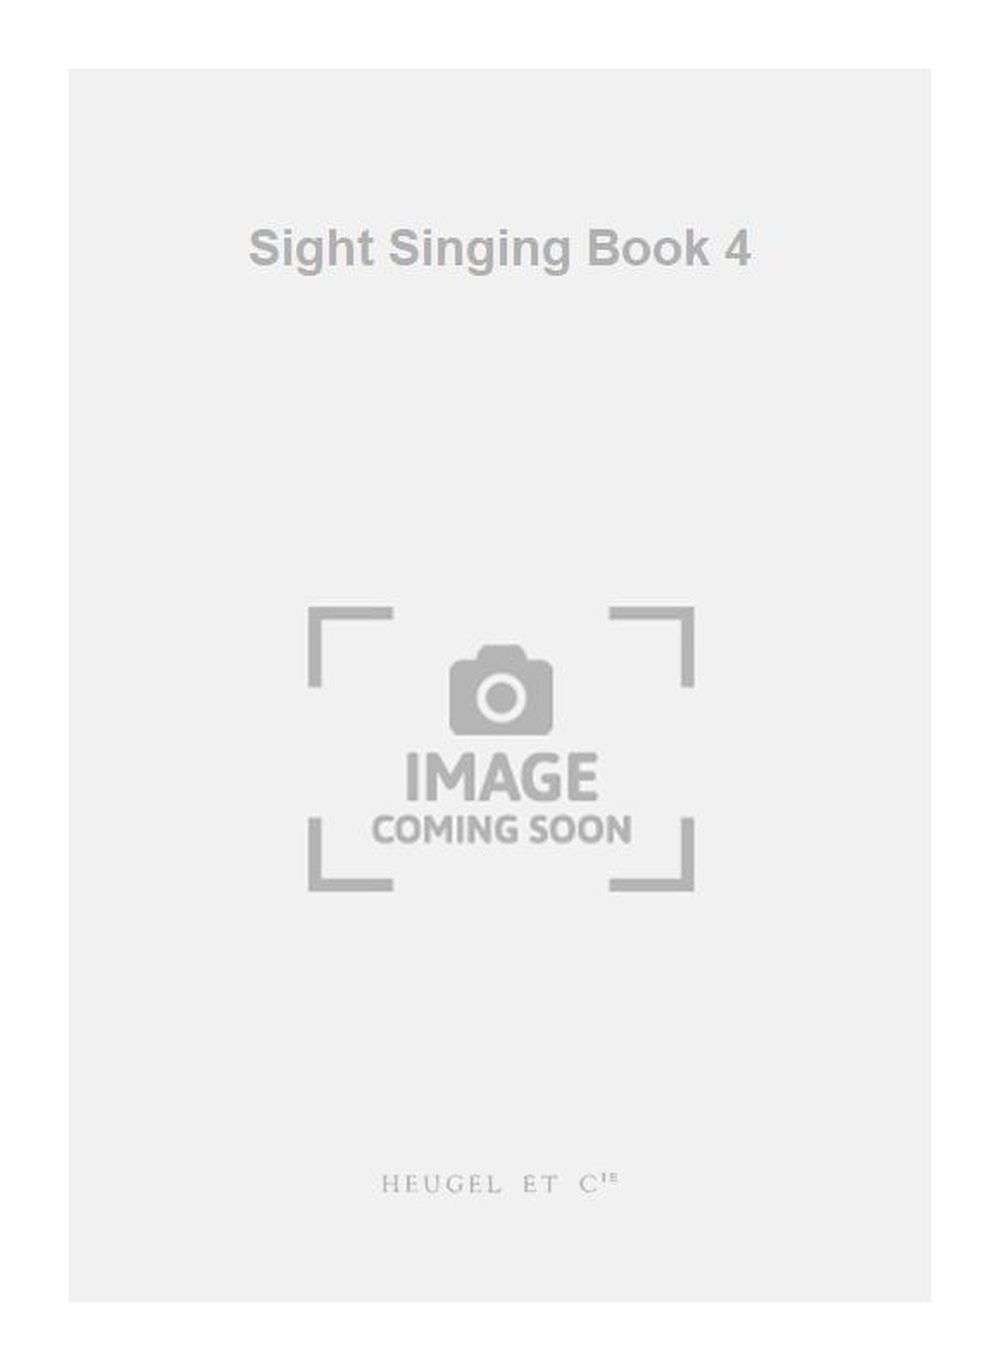 Pittion: Sight Singing Book 4